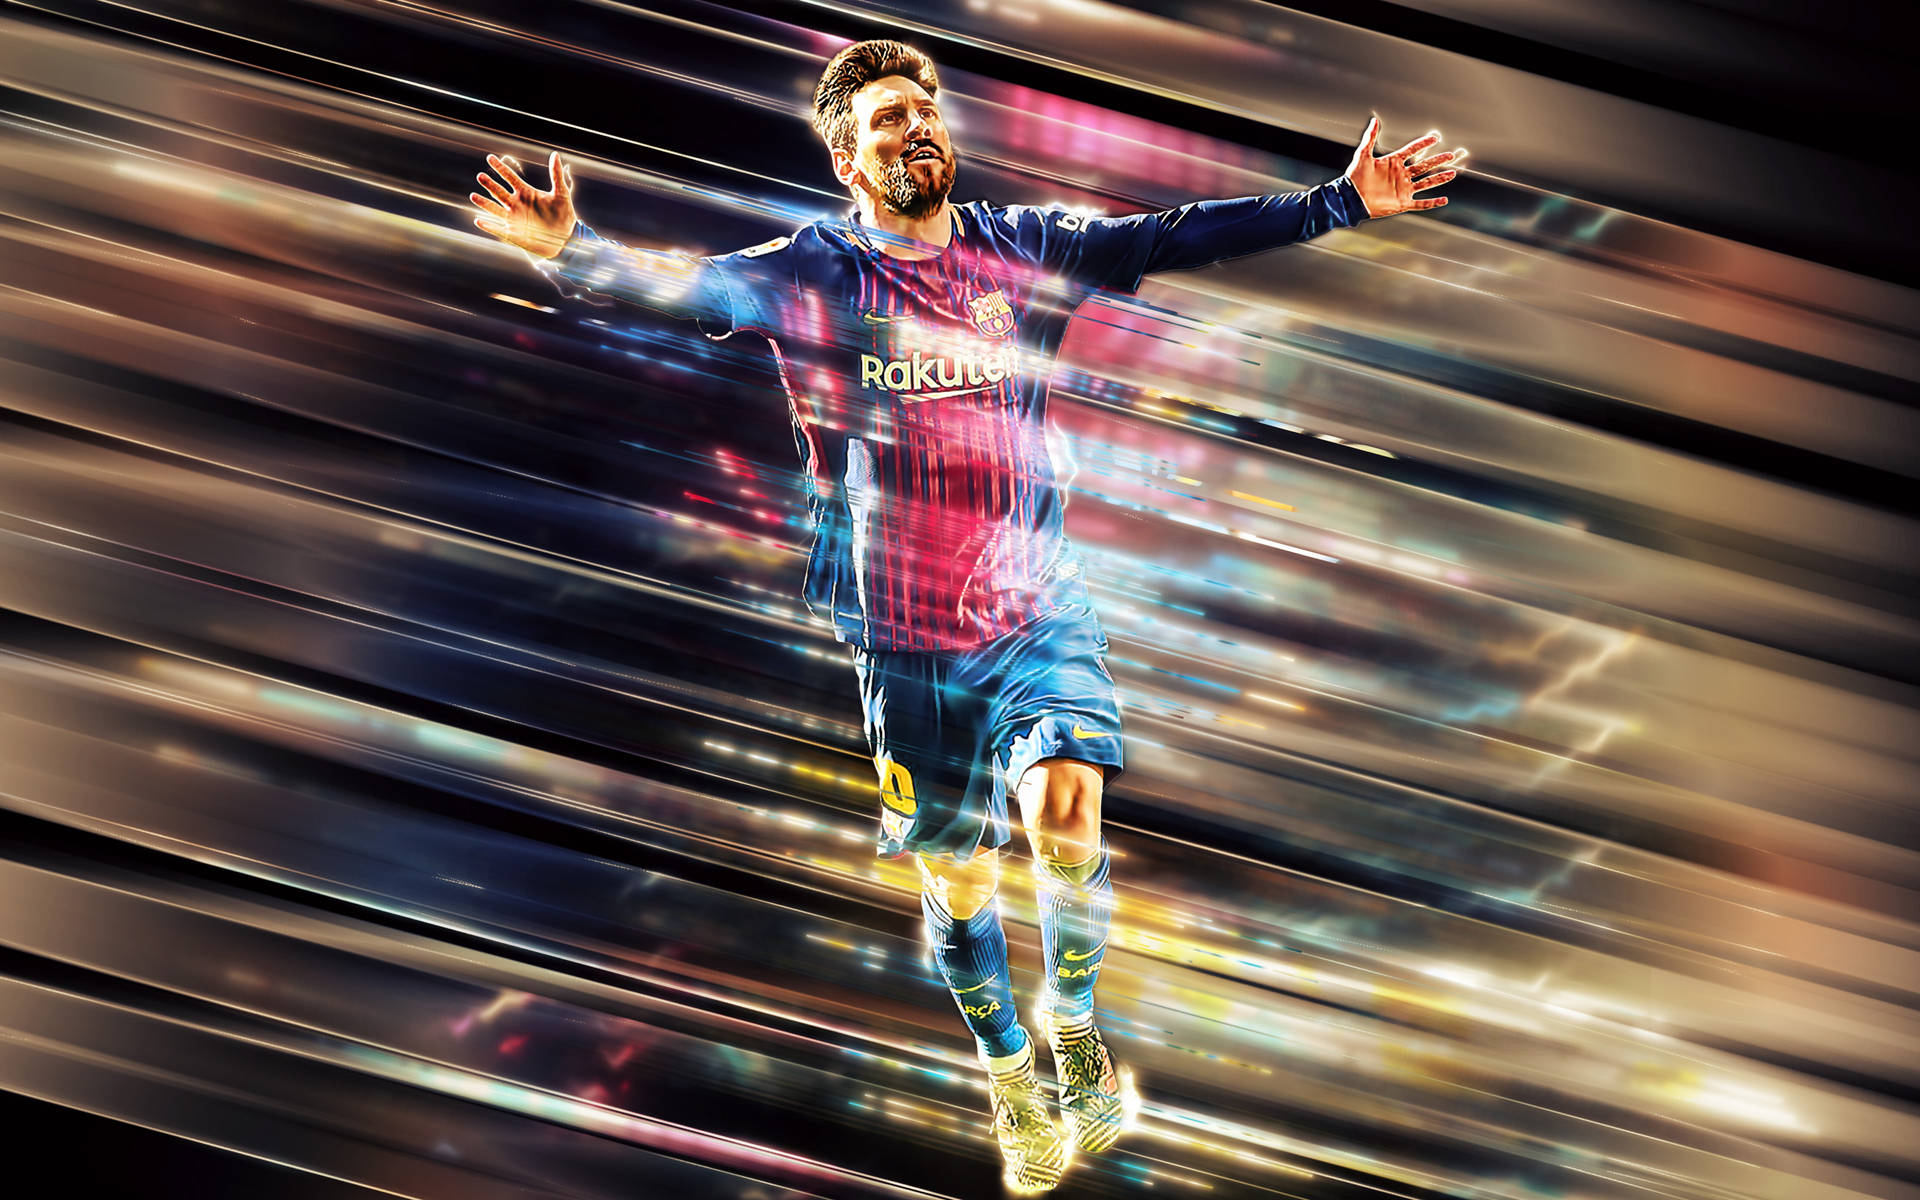 Messi 2020 Wallpaper